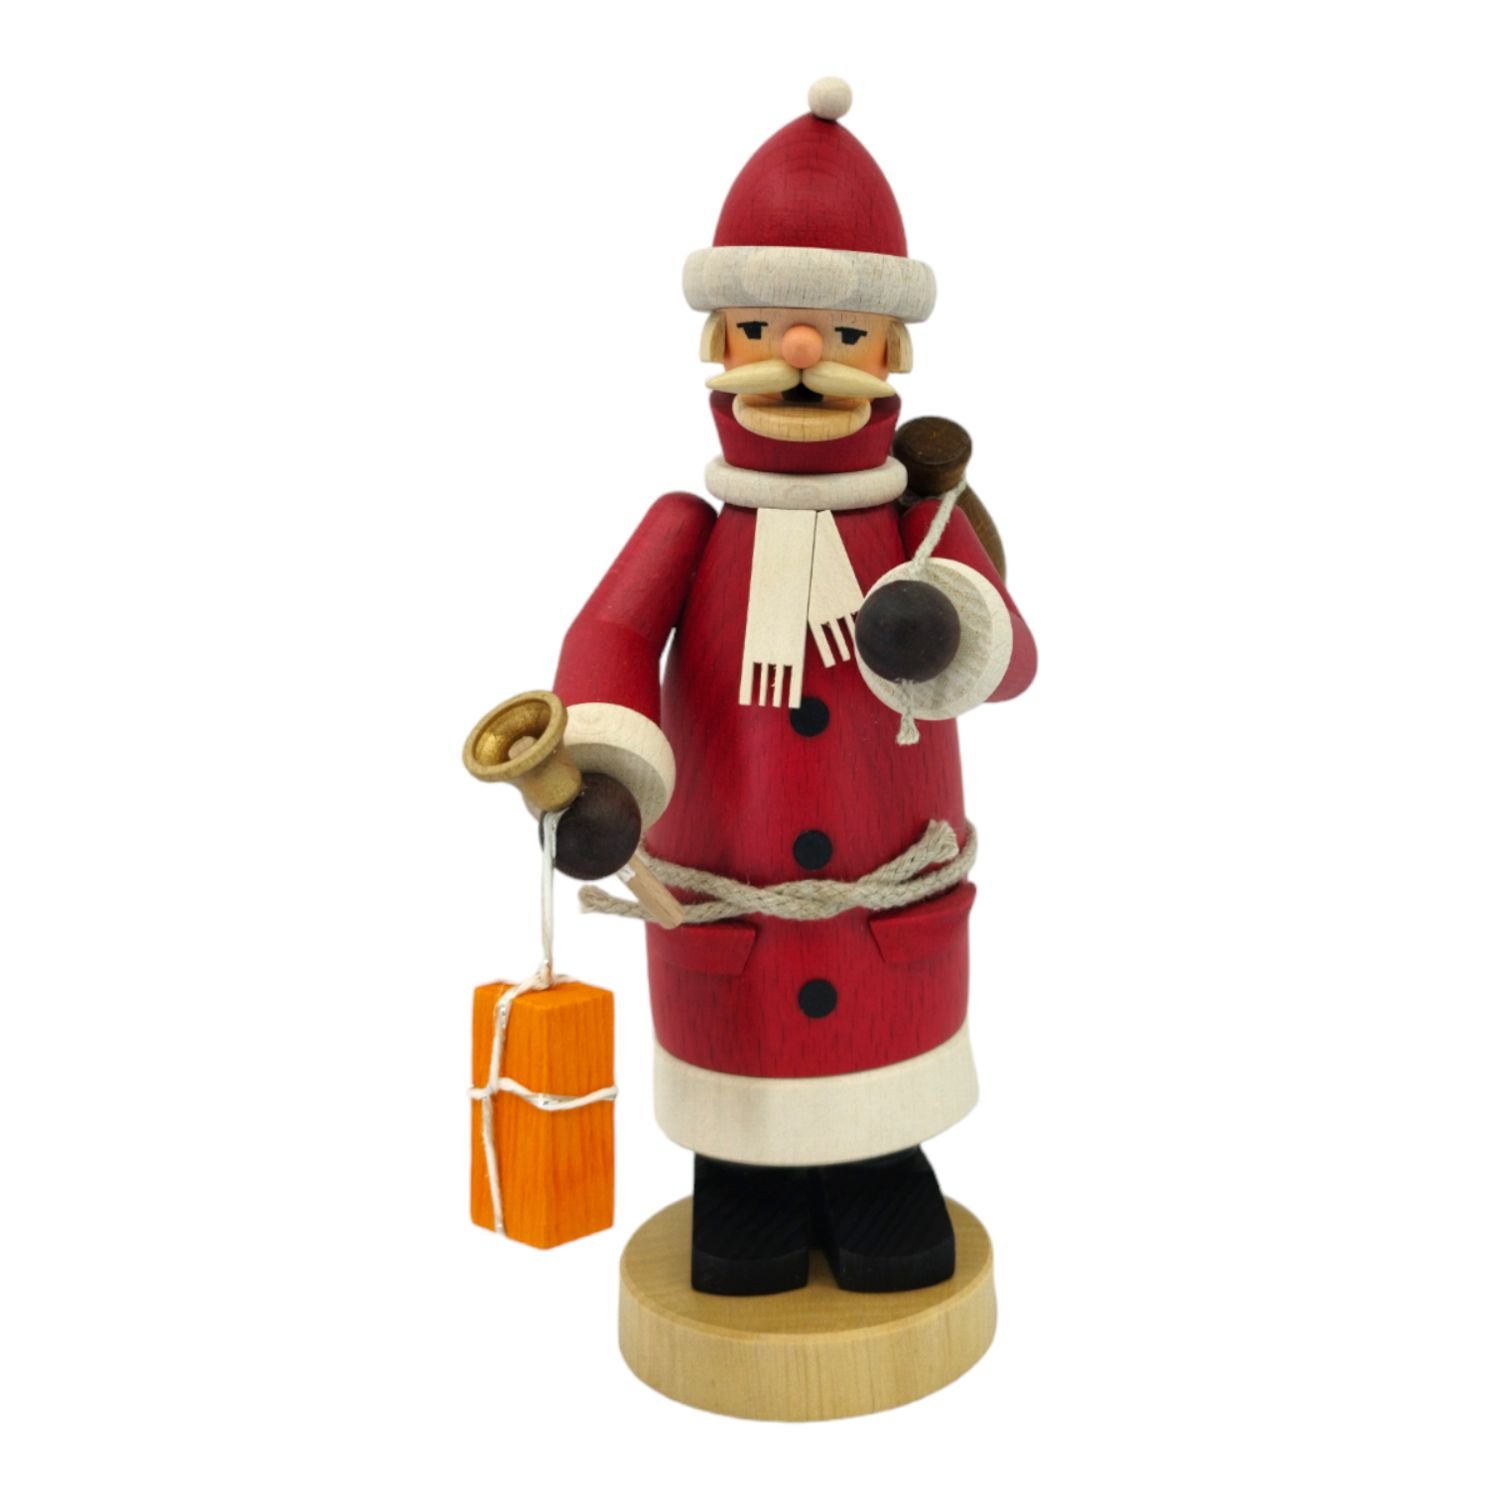 Smoker Santa Claus, colored